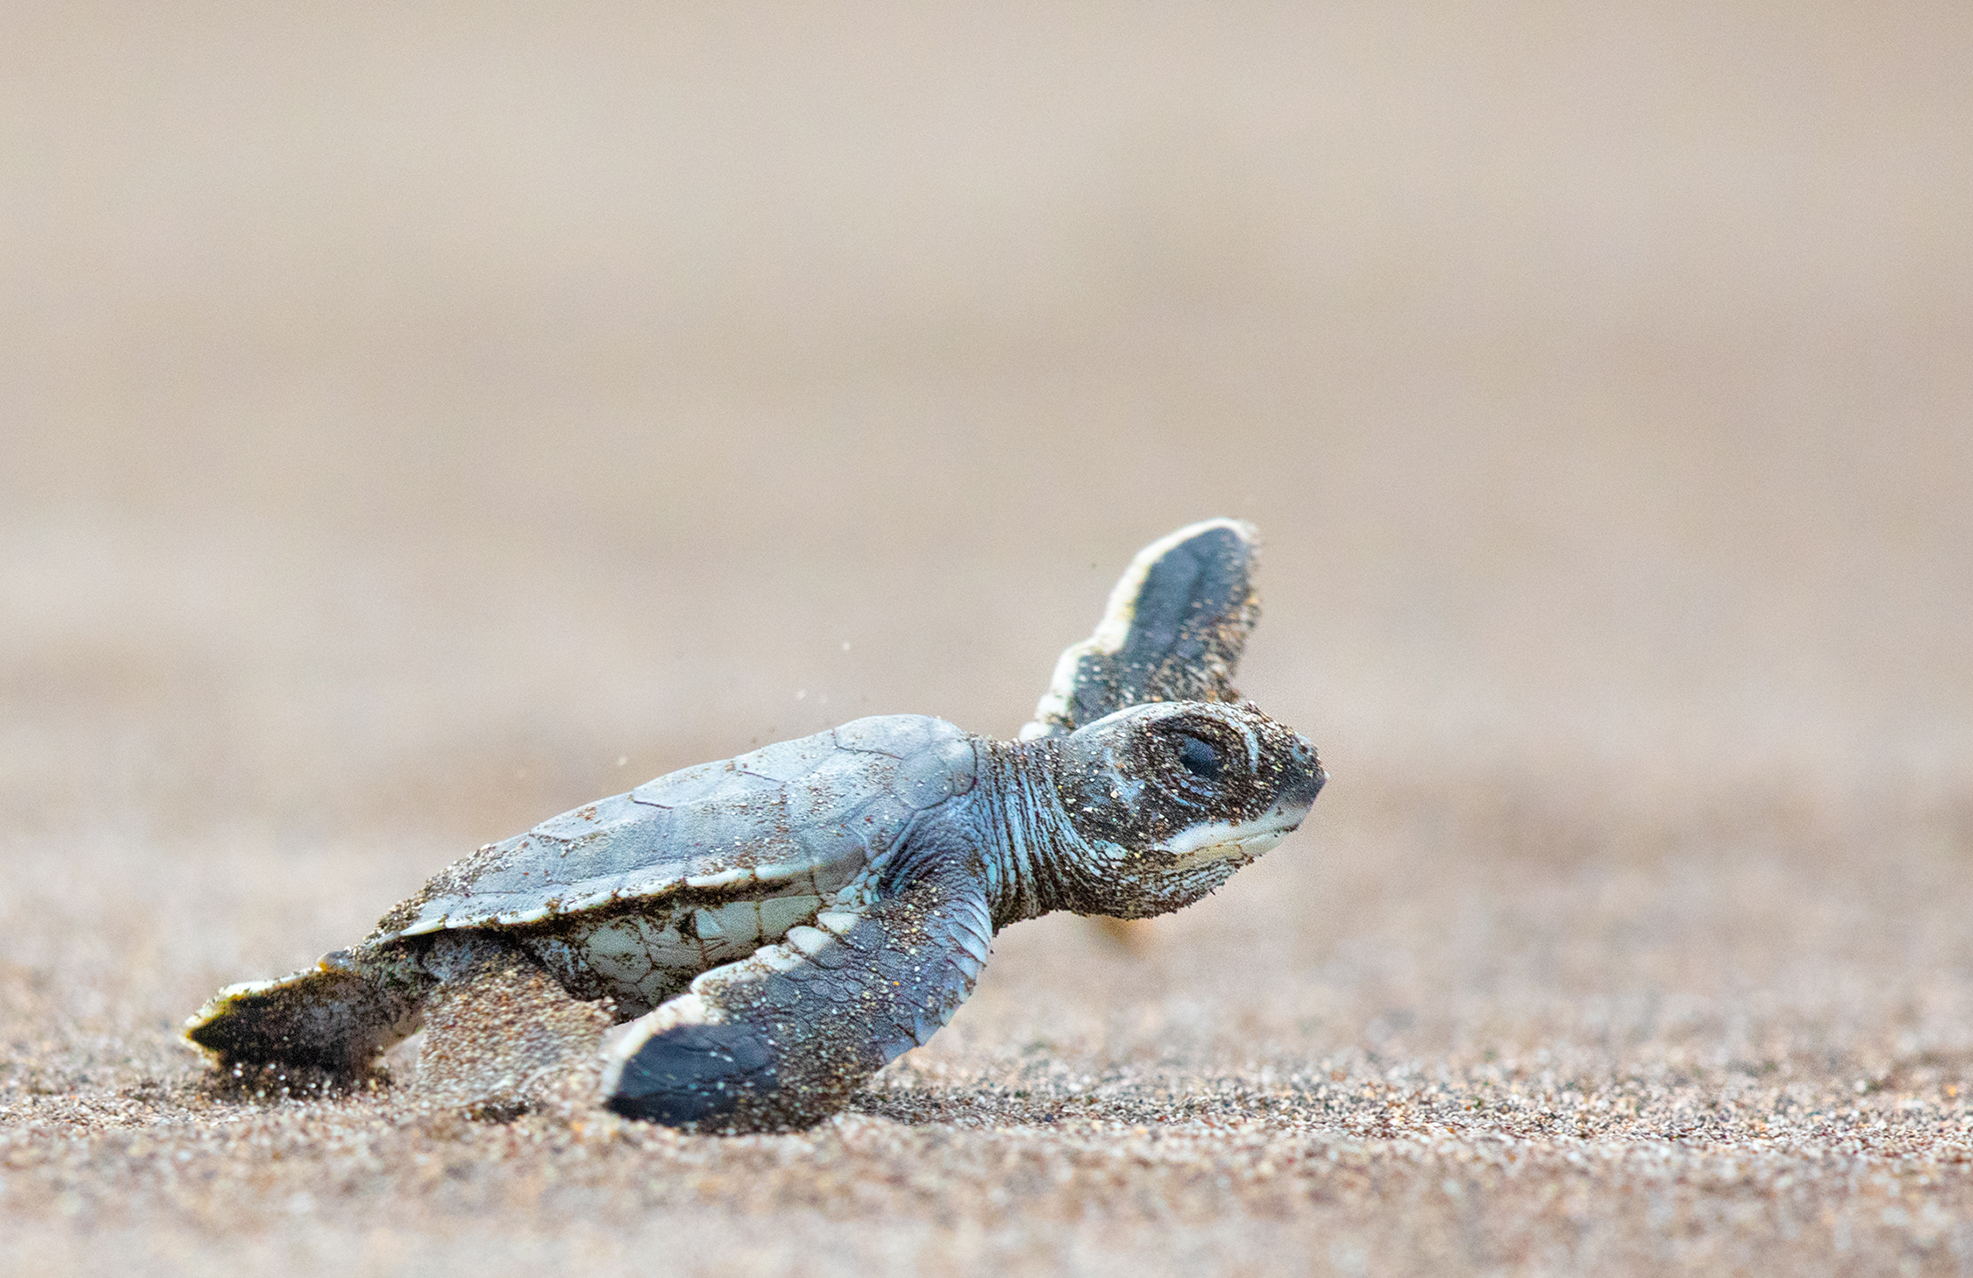  Baby sea turtle on beach